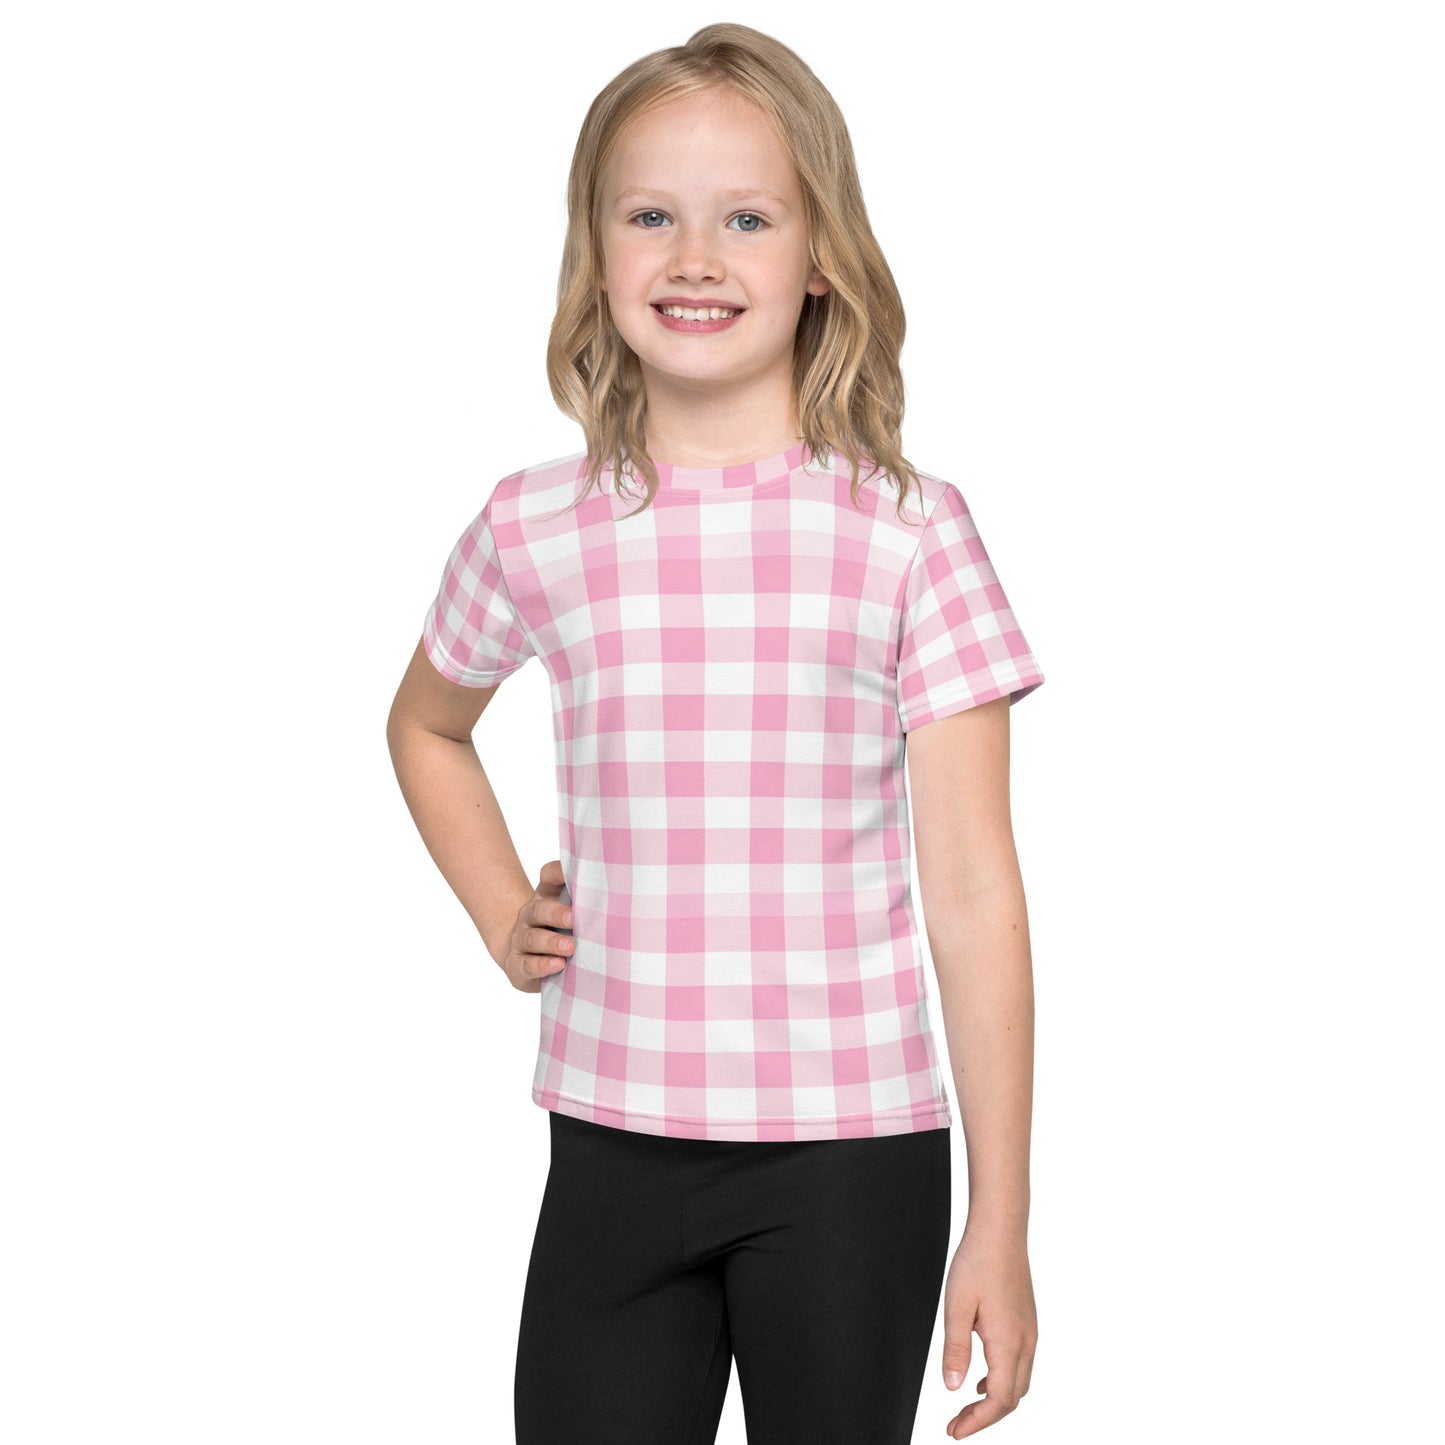 Pink Gingham Kids Tshirt (2T-7), Checkered Check Toddler Graphic Girls Boys Aesthetic Fashion Crewneck Tee Top Gift Shirt Starcove Fashion